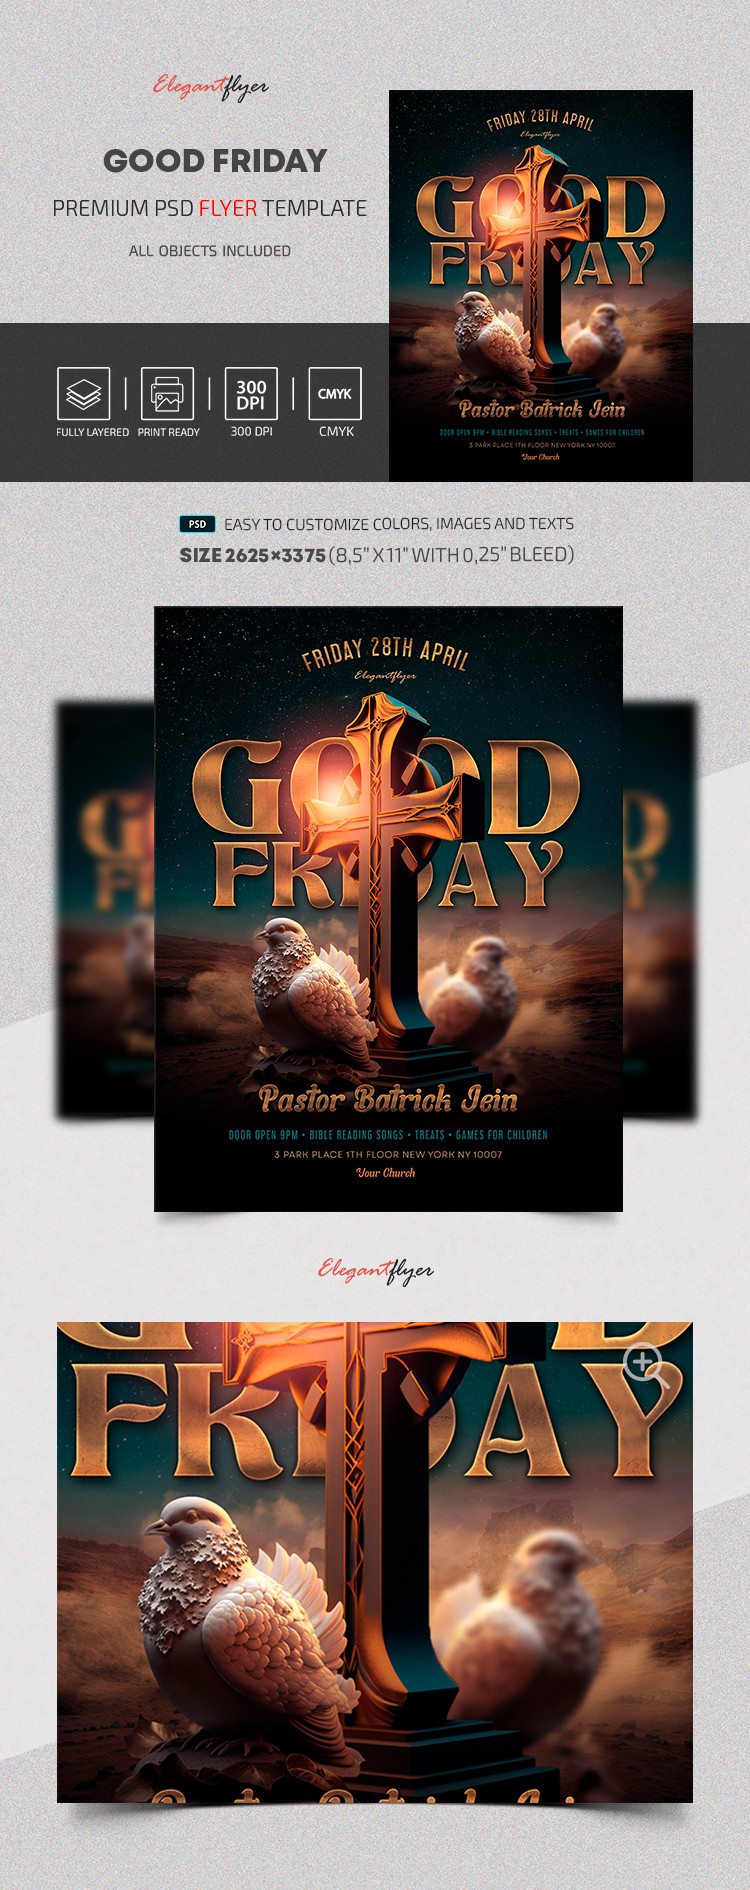 Good Friday - Premium PSD Flyer Template by ElegantFlyer